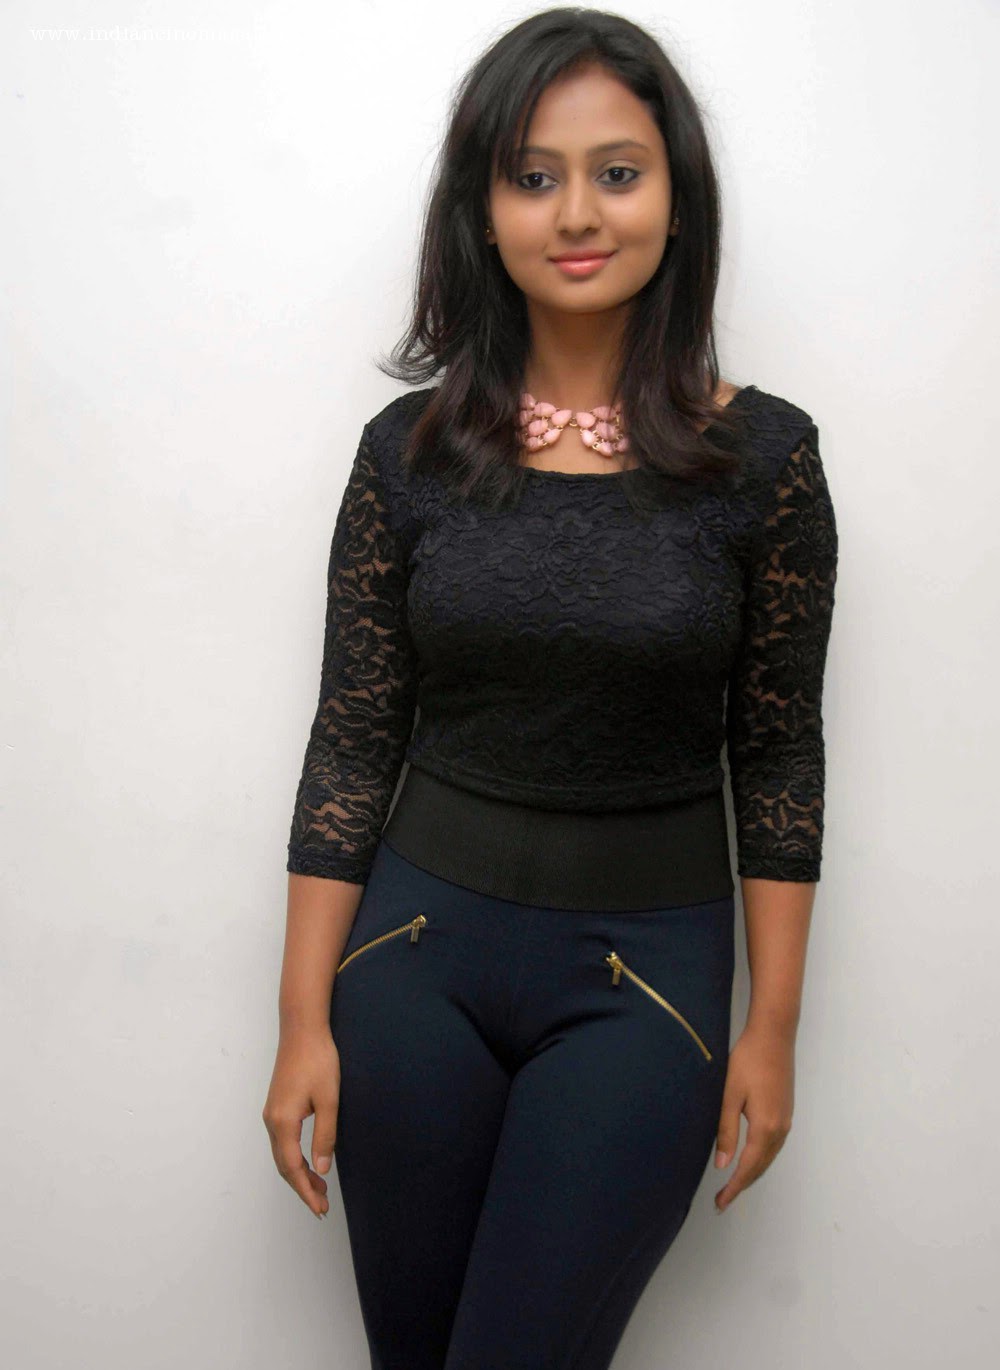 Amulya Sex Photos - Sexy Malayalam Young actress amulya with skin tight leggins ...